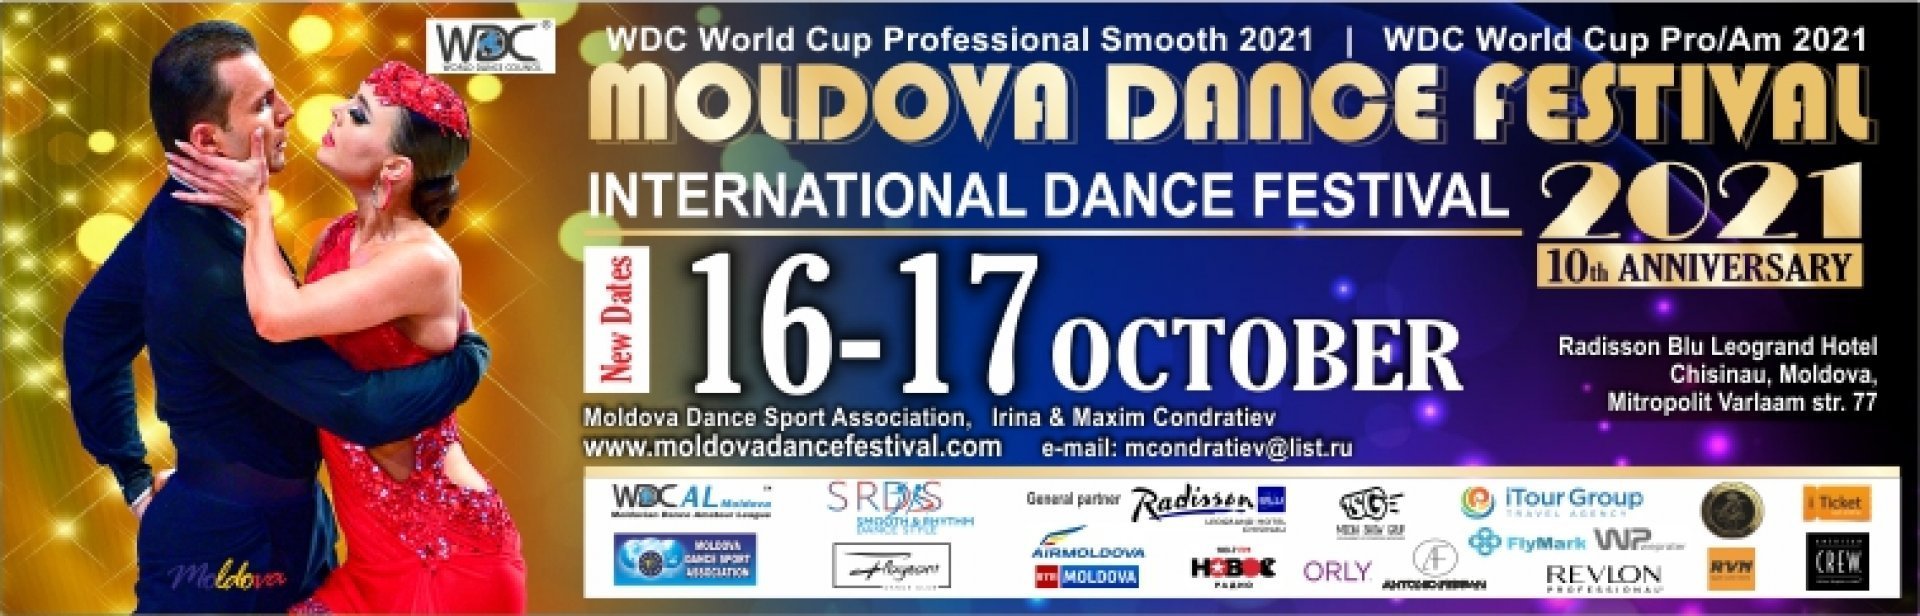 16 Octombrie 19:30 Moldova Dance Festival - ONLINE 